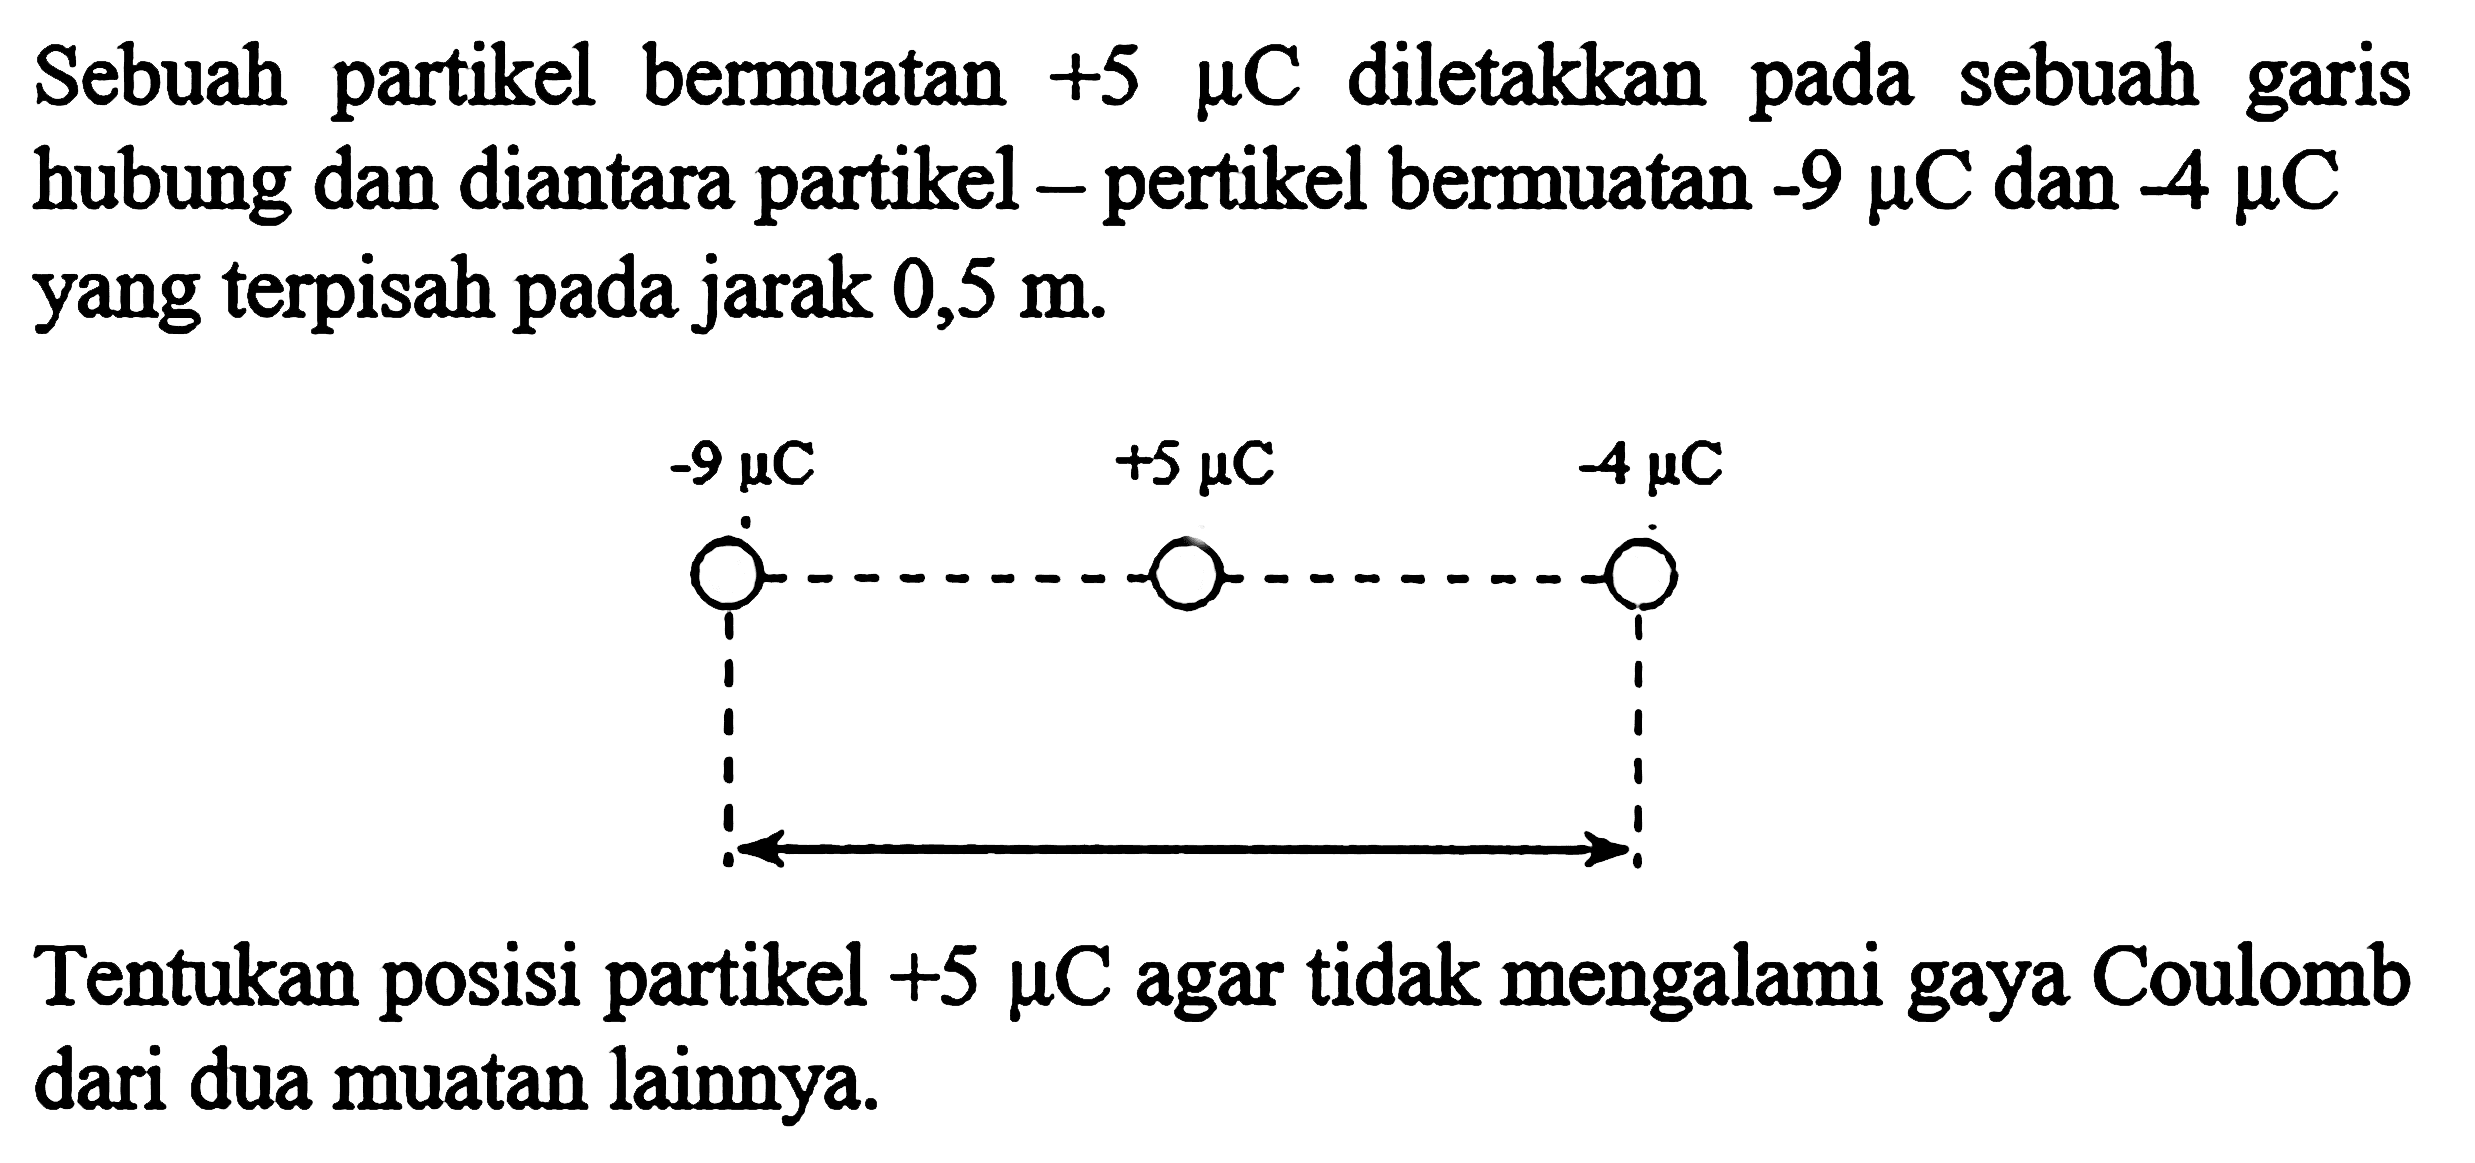 Sebuah partikel bermuatan +5 mu C diletakkan pada sebuah garis hubung dan diantara partikel - pertikel bermuatan -9 mu C dan -4 mu C yang terpisah pada jarak 0,5 m. Tentukan posisi partikel +5 mu C agar tidak mengalami gaya Coulomb dari dua muatan lainnya.